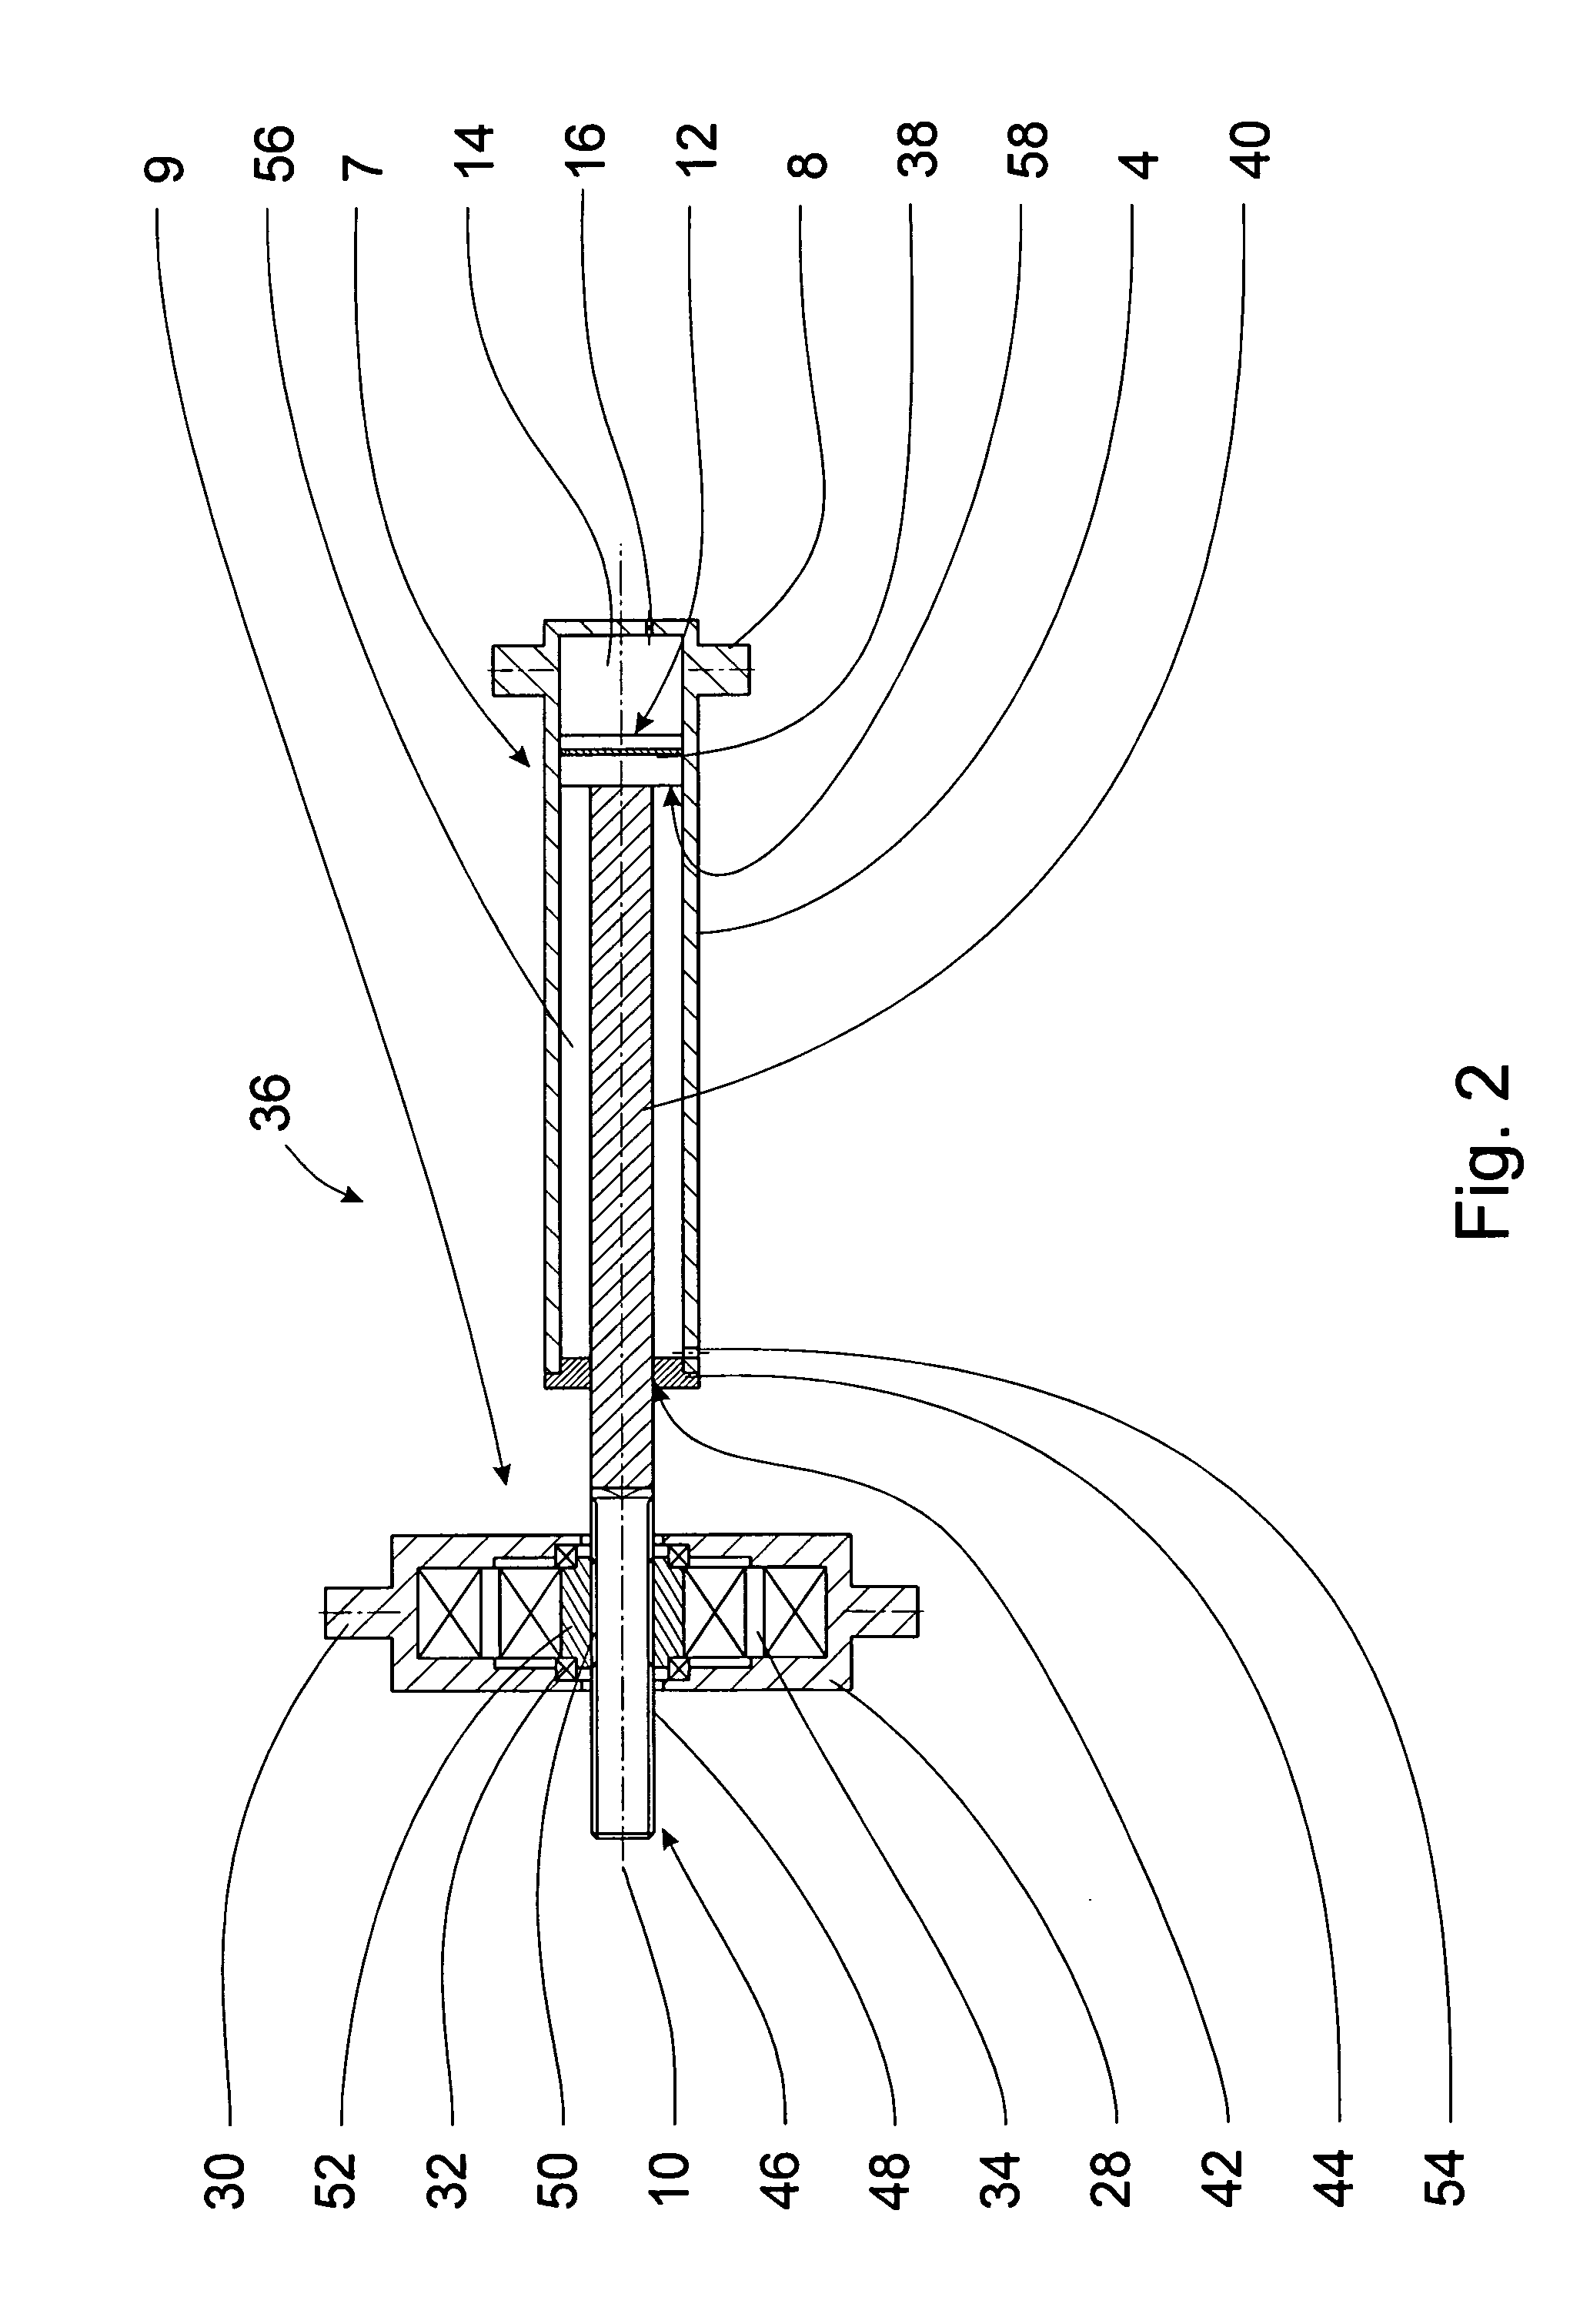 Dual linear actuator